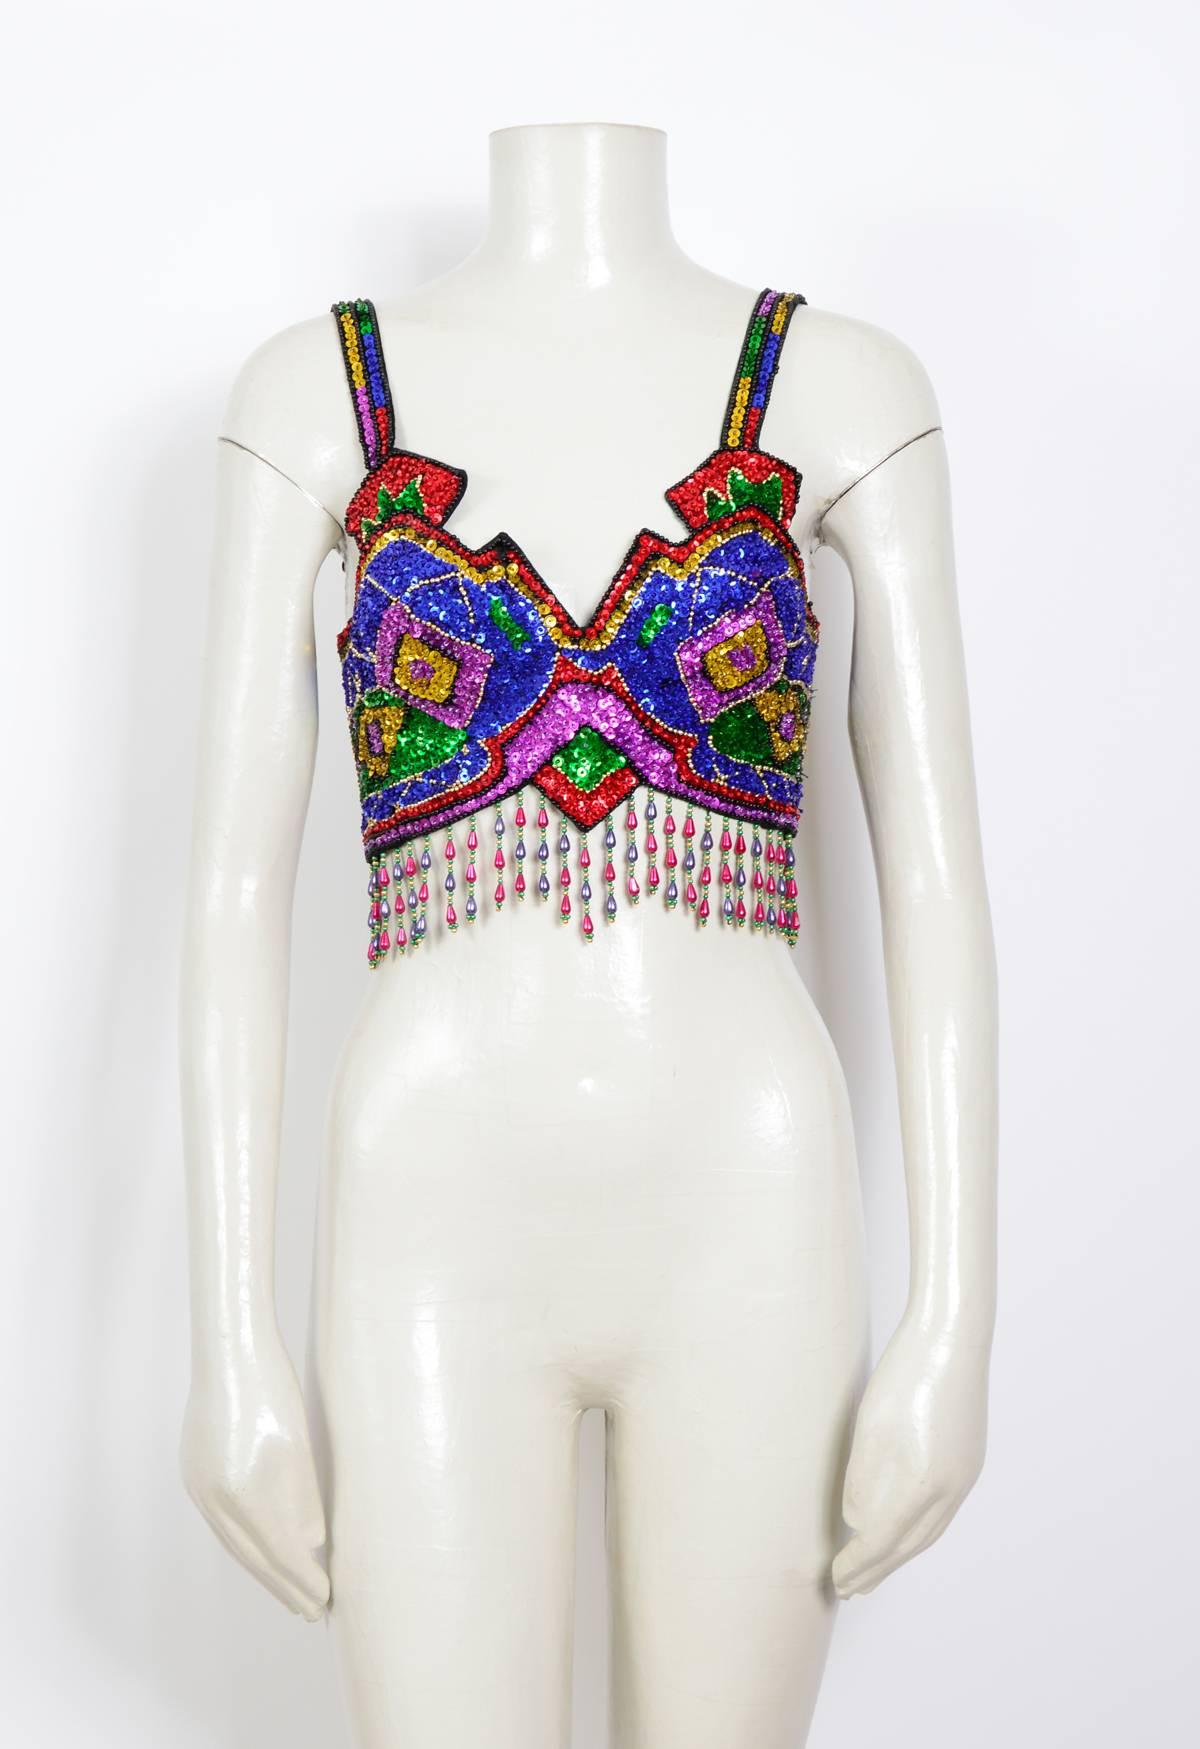 Vintage 80's sequin party bra top.
Outside Satin + Sequin - Inside Cotton
Size M
Measurements taken flat:
Ua to Ua 15inch/38cm